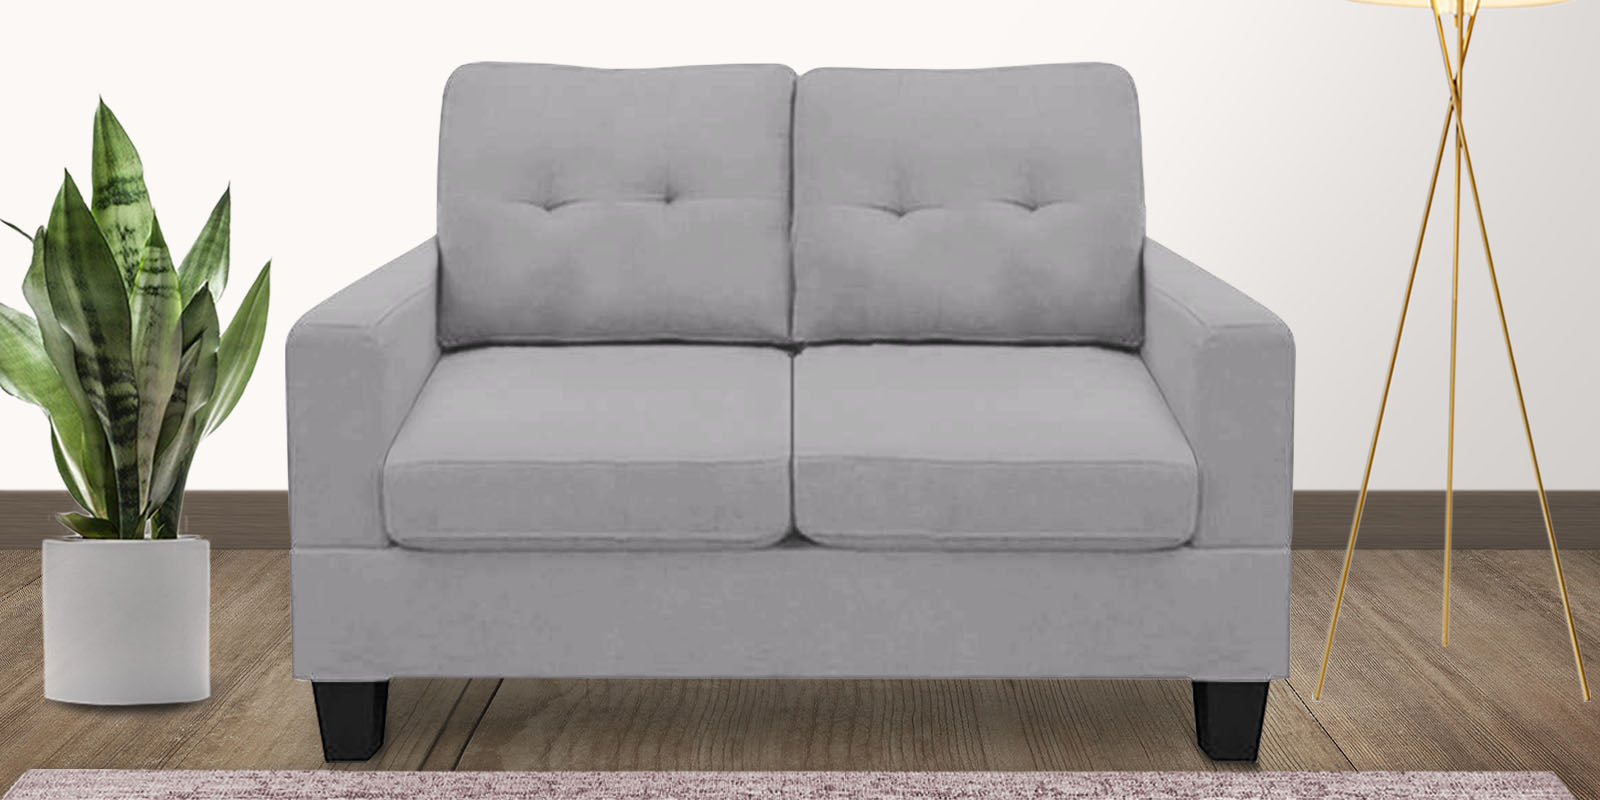 Thomas Fabric 2 Seater Sofa in Lit Grey Colour